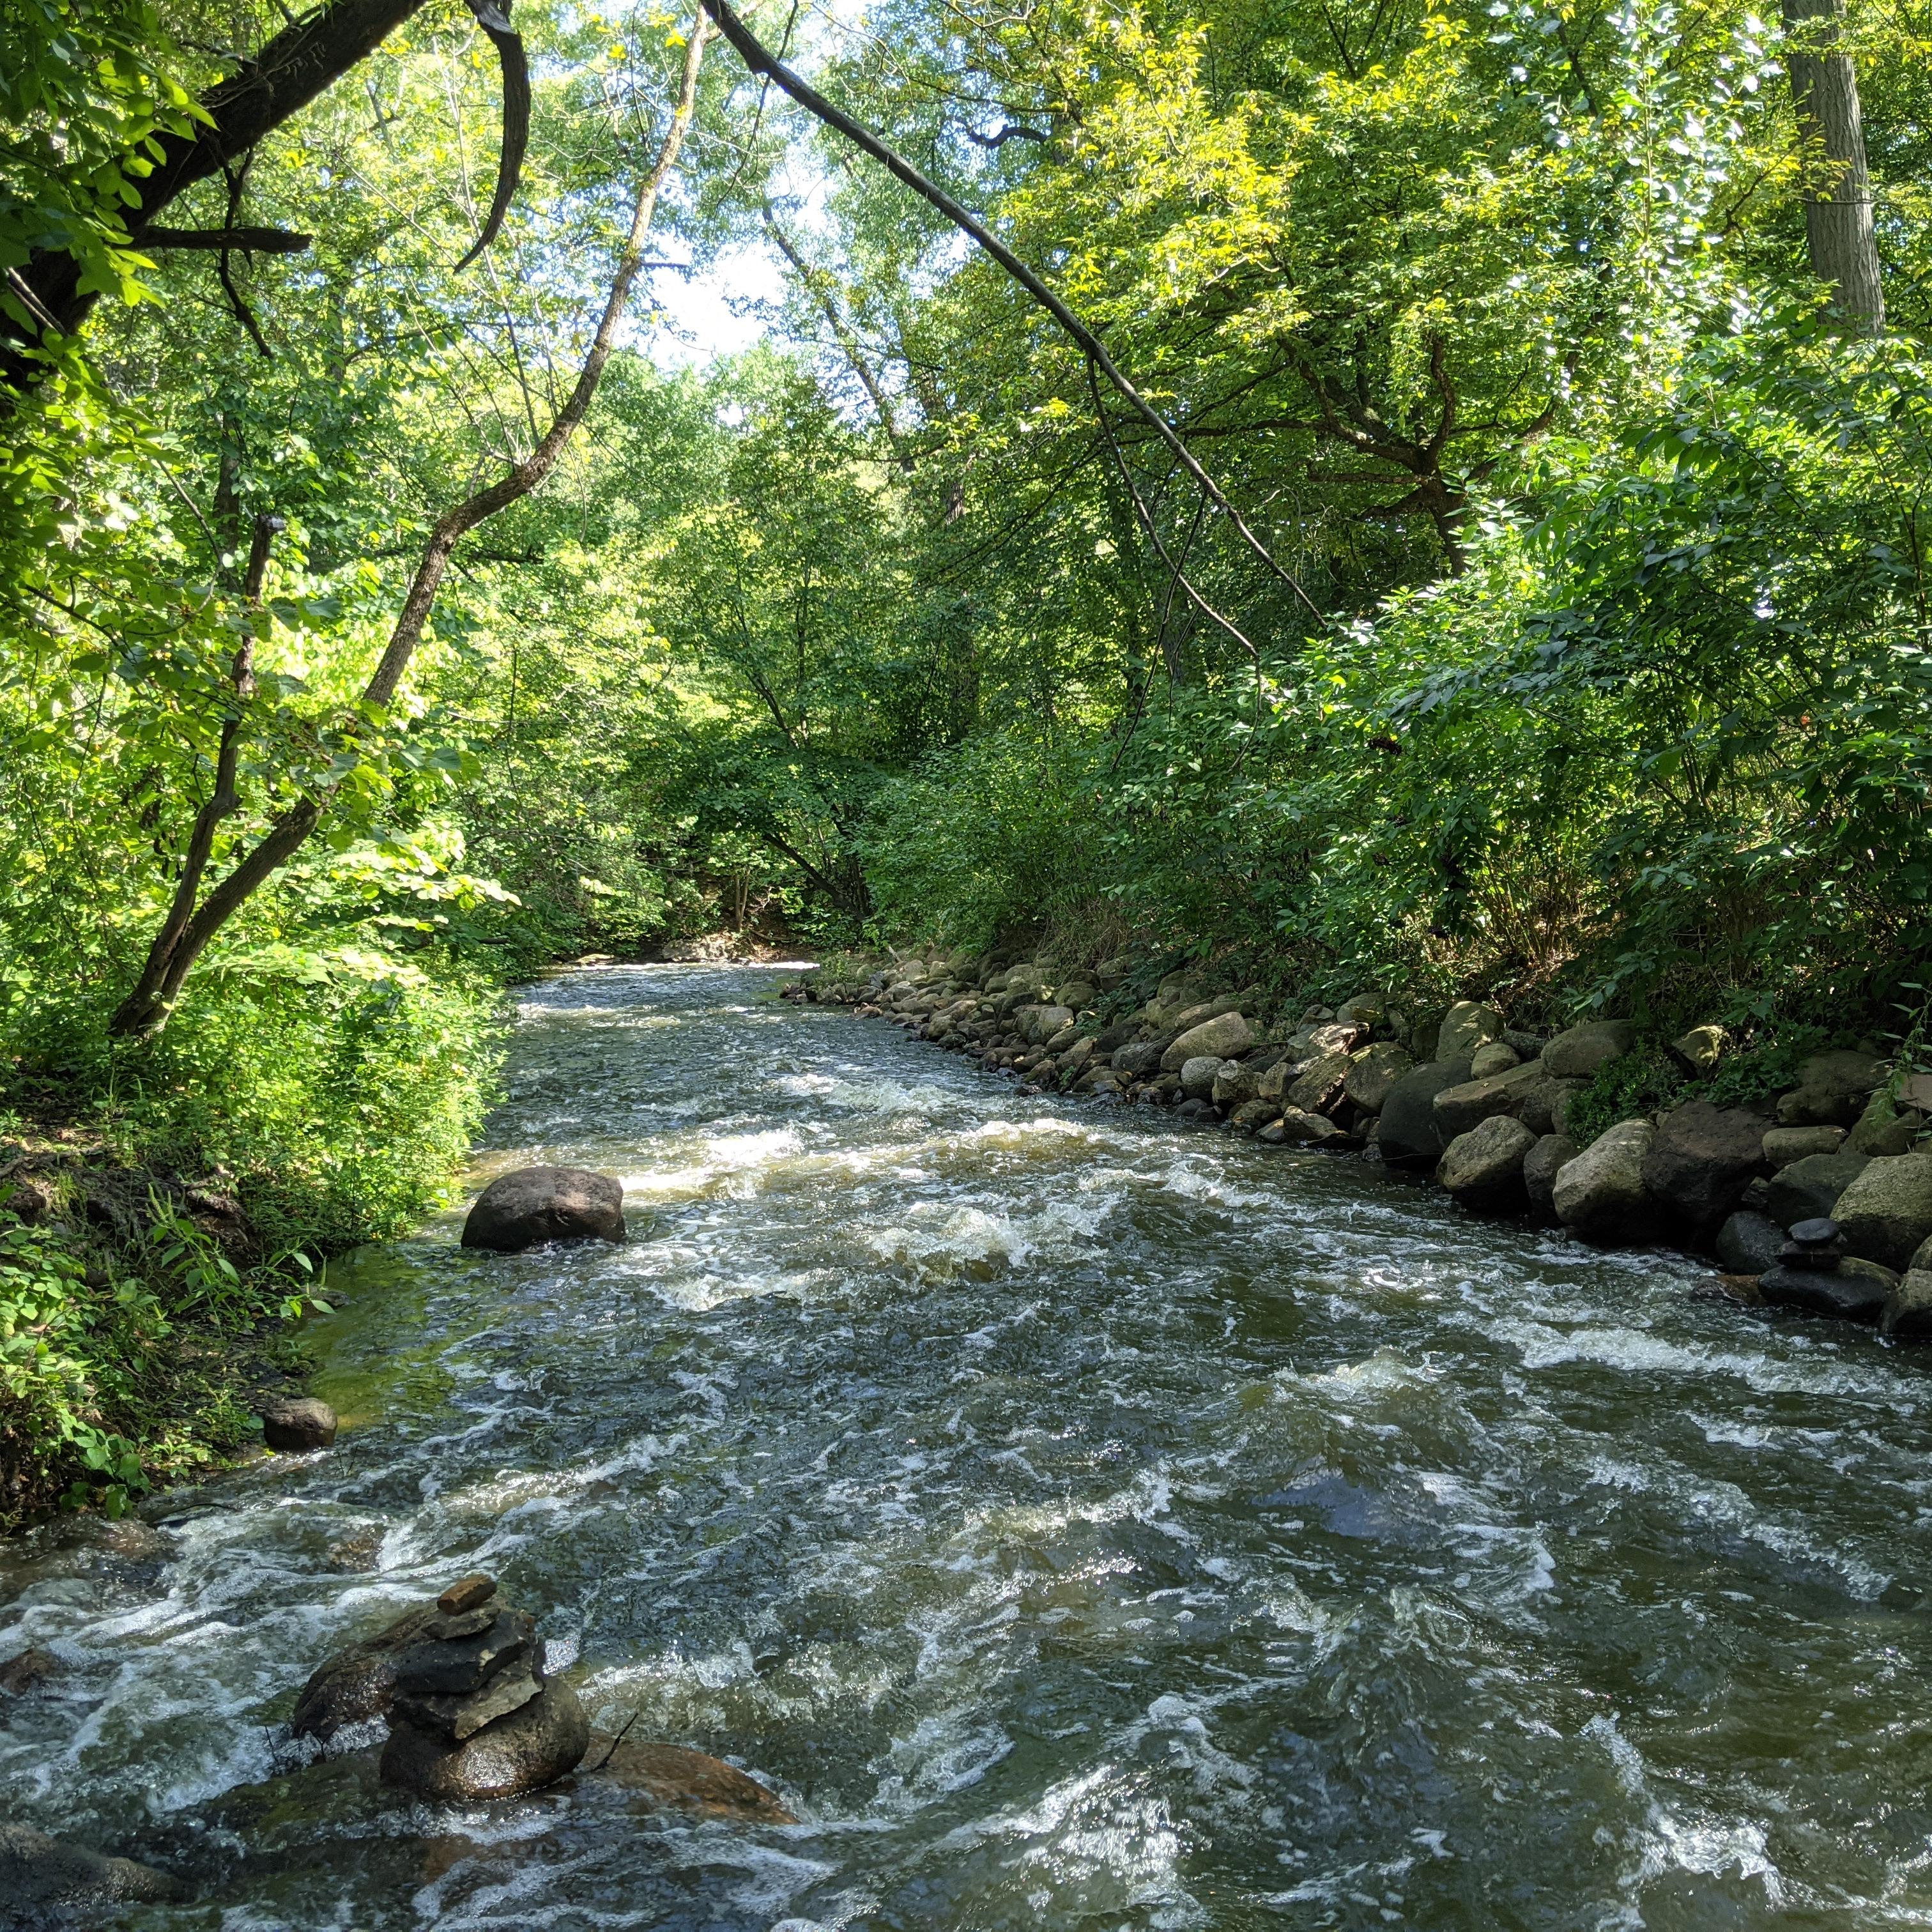 A photograph of Minnehaha Creek in Minneapolis, just below Minnehaha Falls.